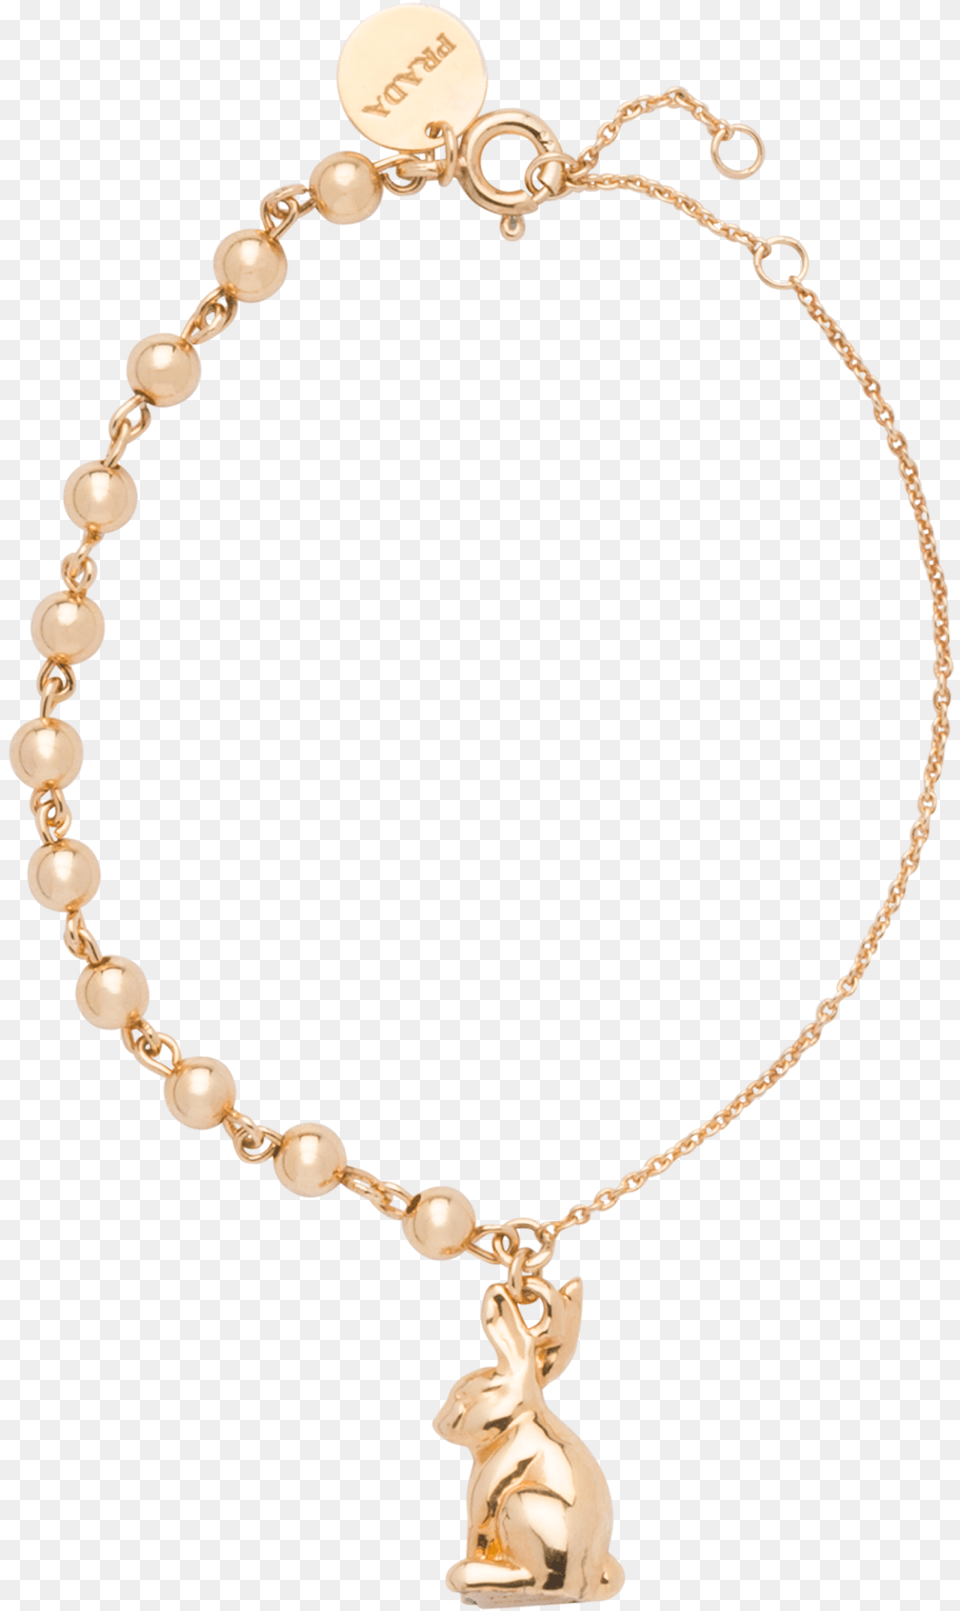 Prada Fine Jewellery Gold Bracelet, Accessories, Jewelry, Necklace Png Image